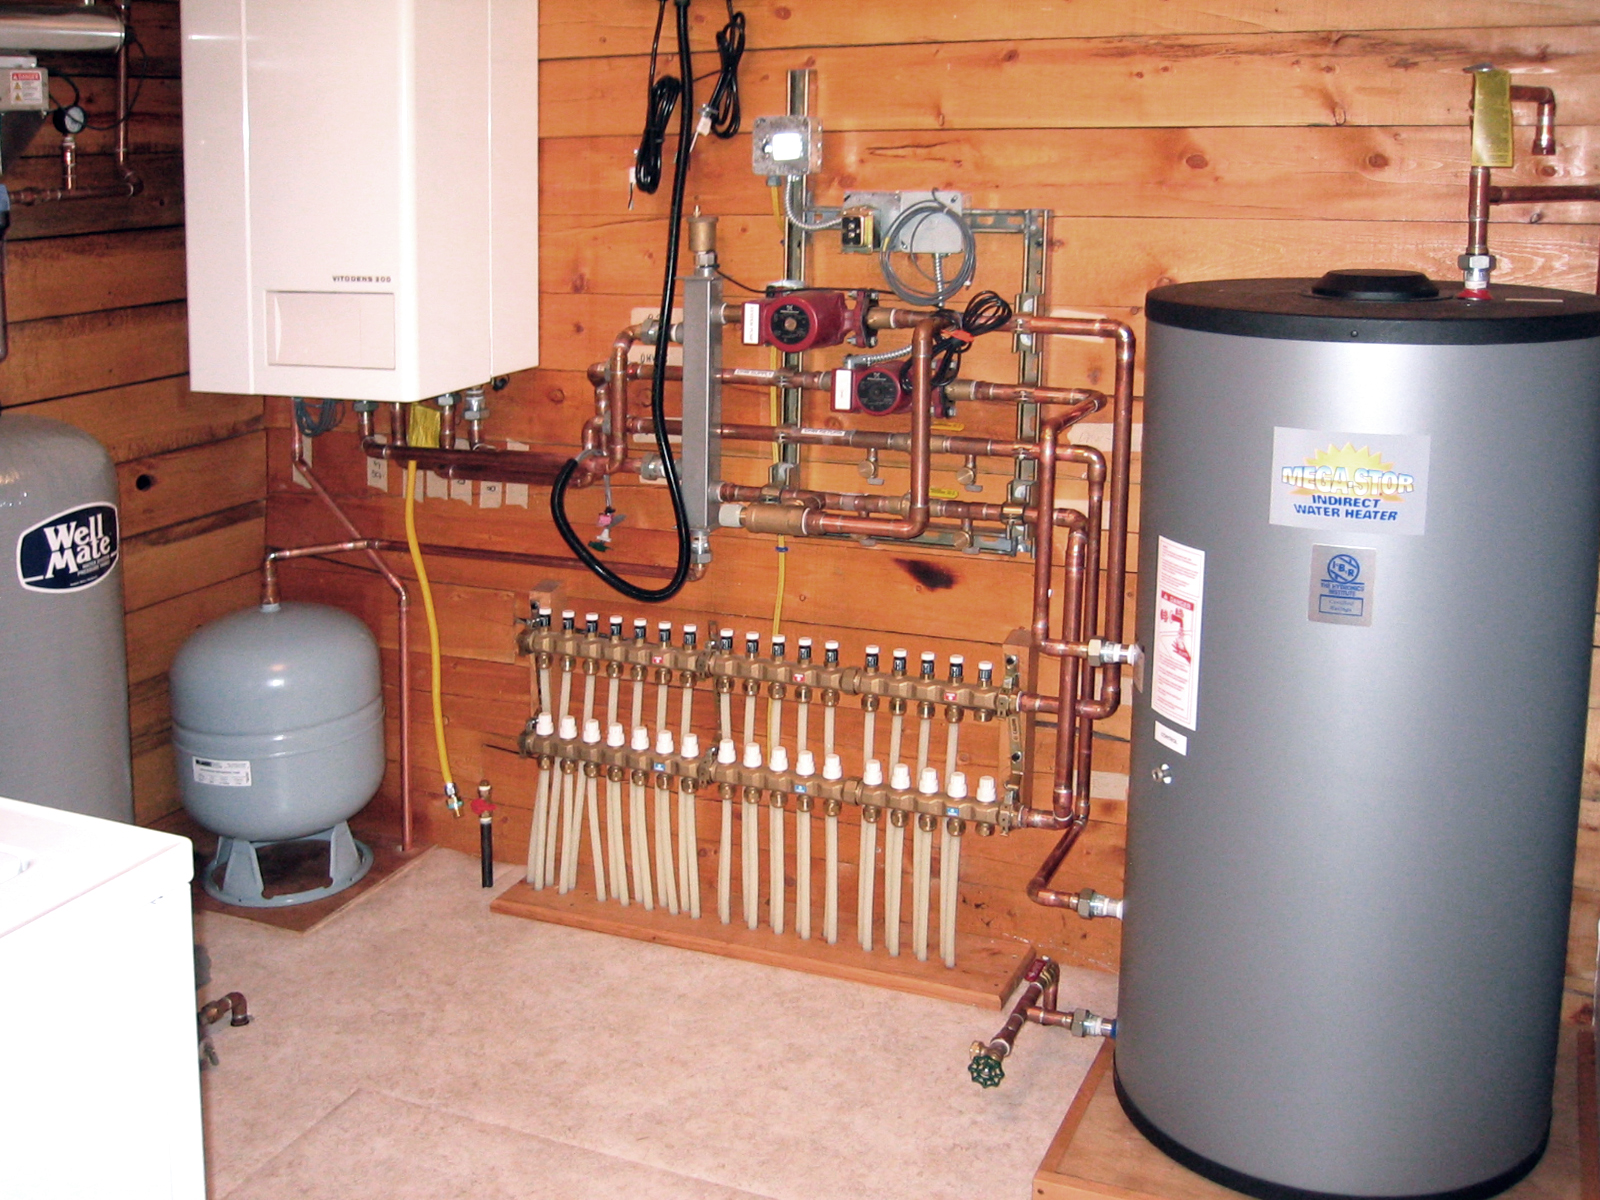 Viessmann boiler hydronic system